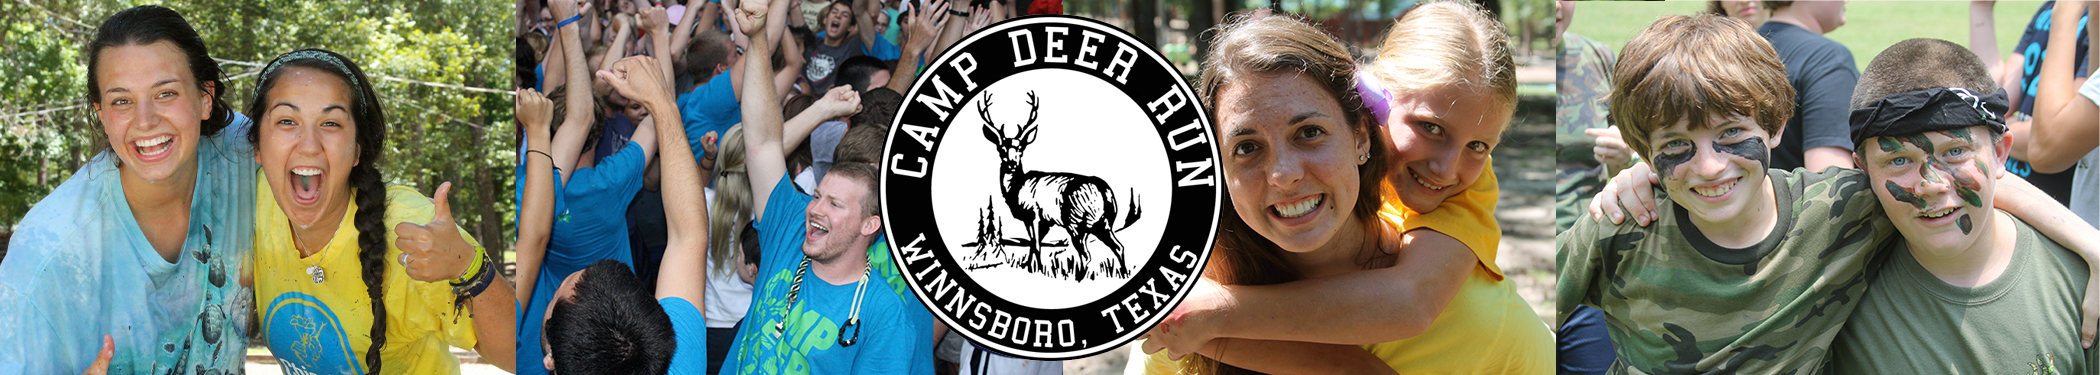 Killi Podcast by Camp Deer Run